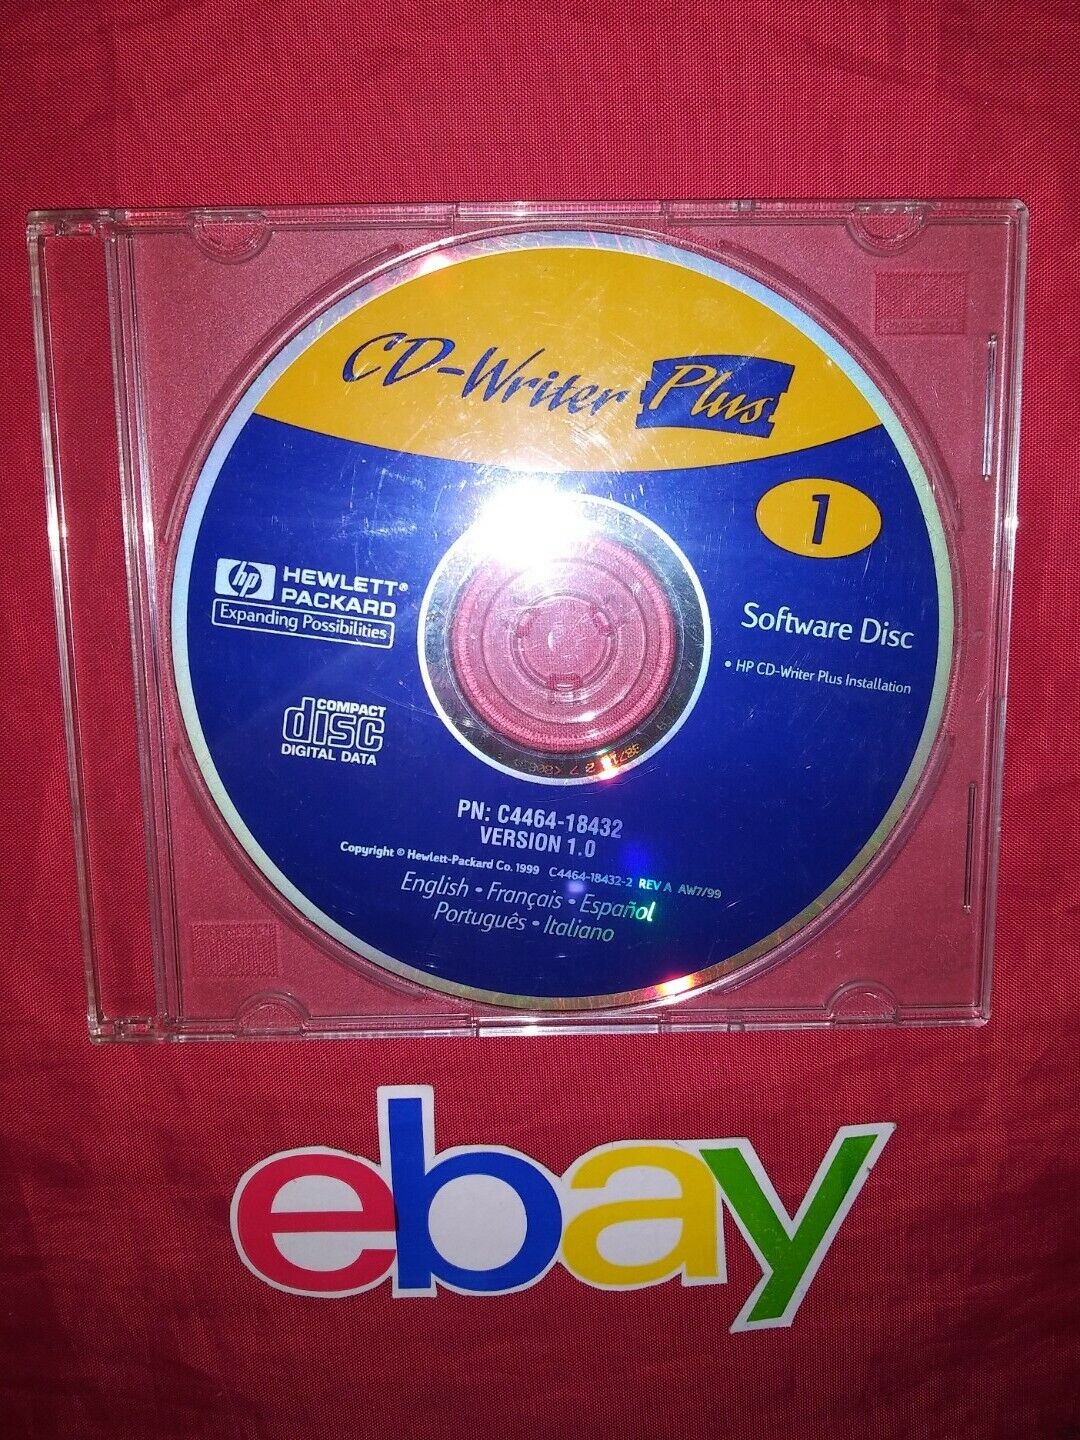 HP software installation disc CD-Writer Plus version 1.0 C4464-18432 GREAT 